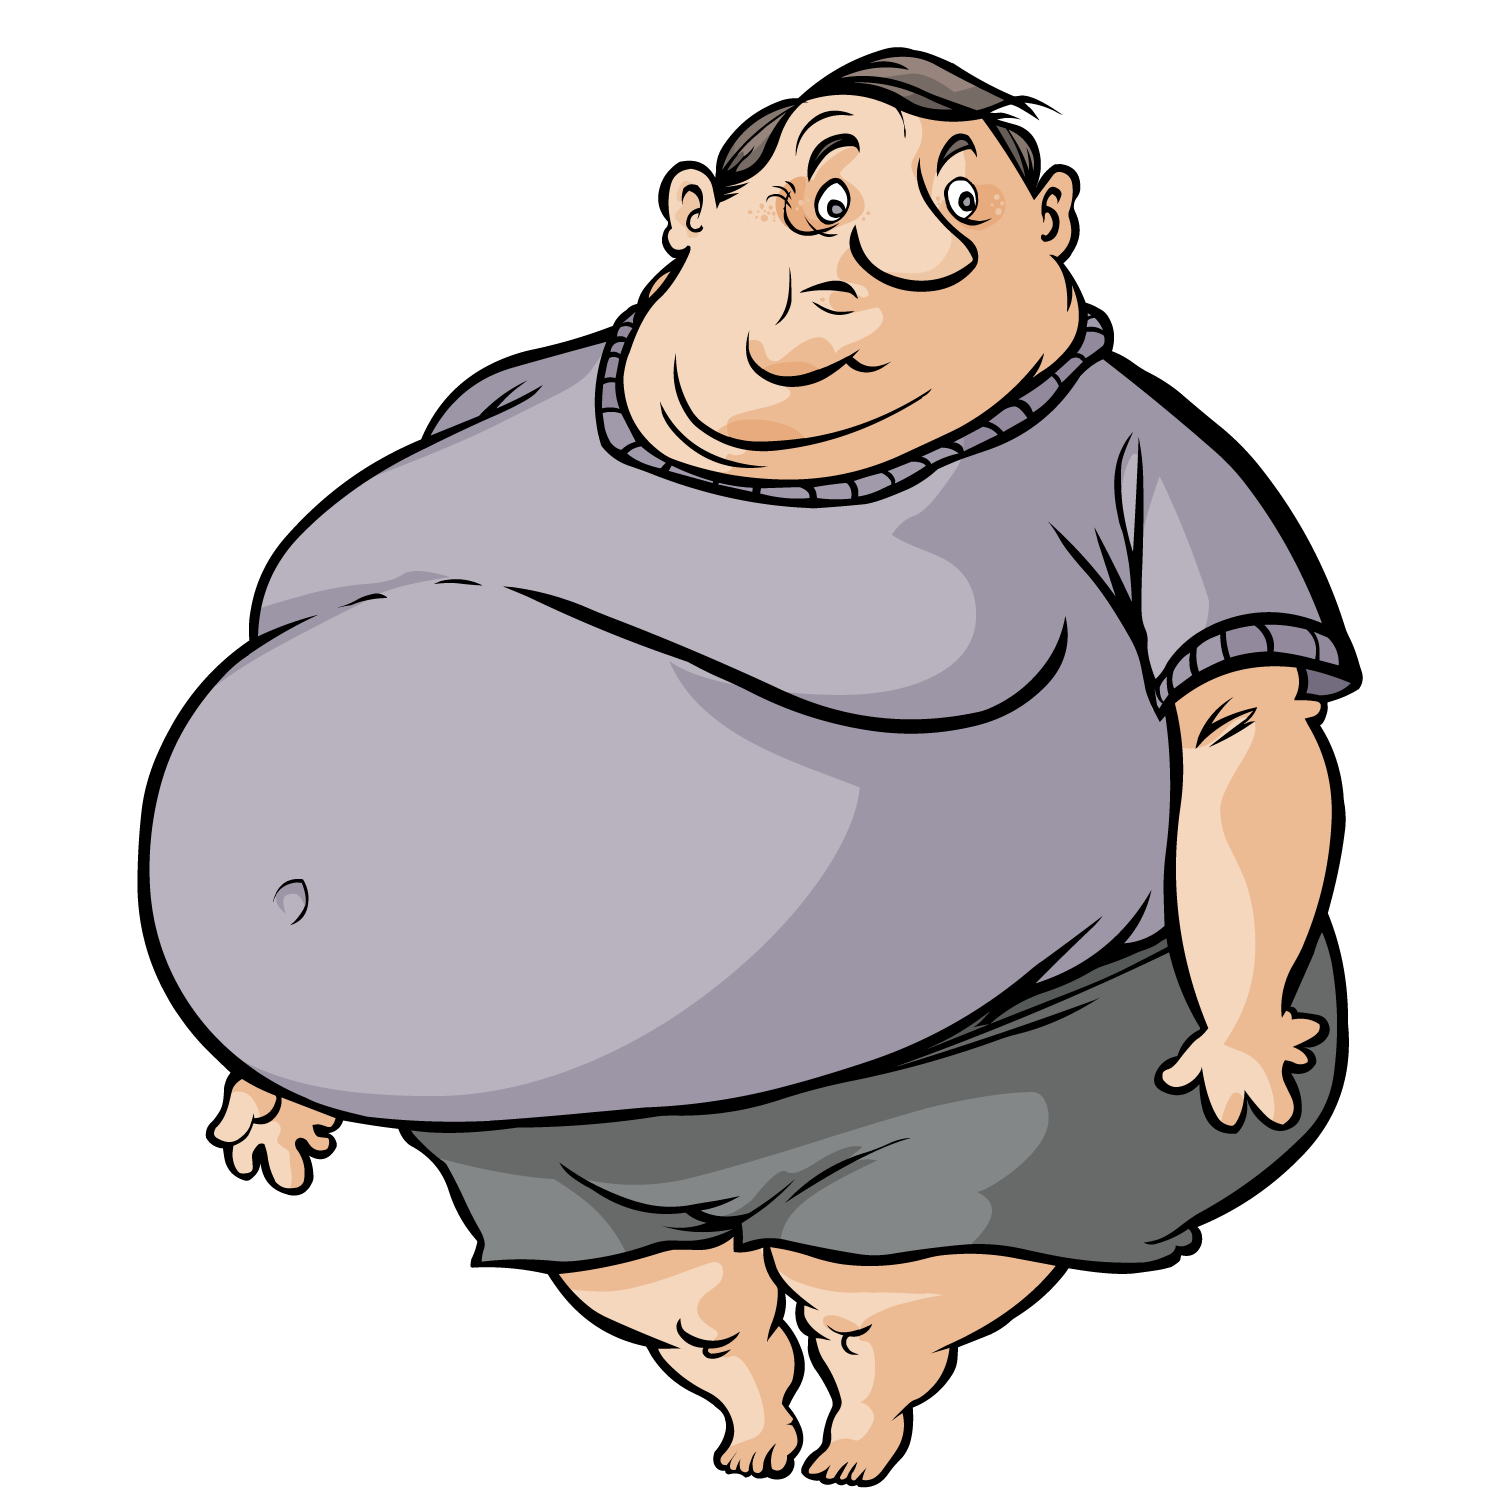 Download Cute Cartoon Fat Man Free Transparent Image HQ Clipart PNG Free Fr...